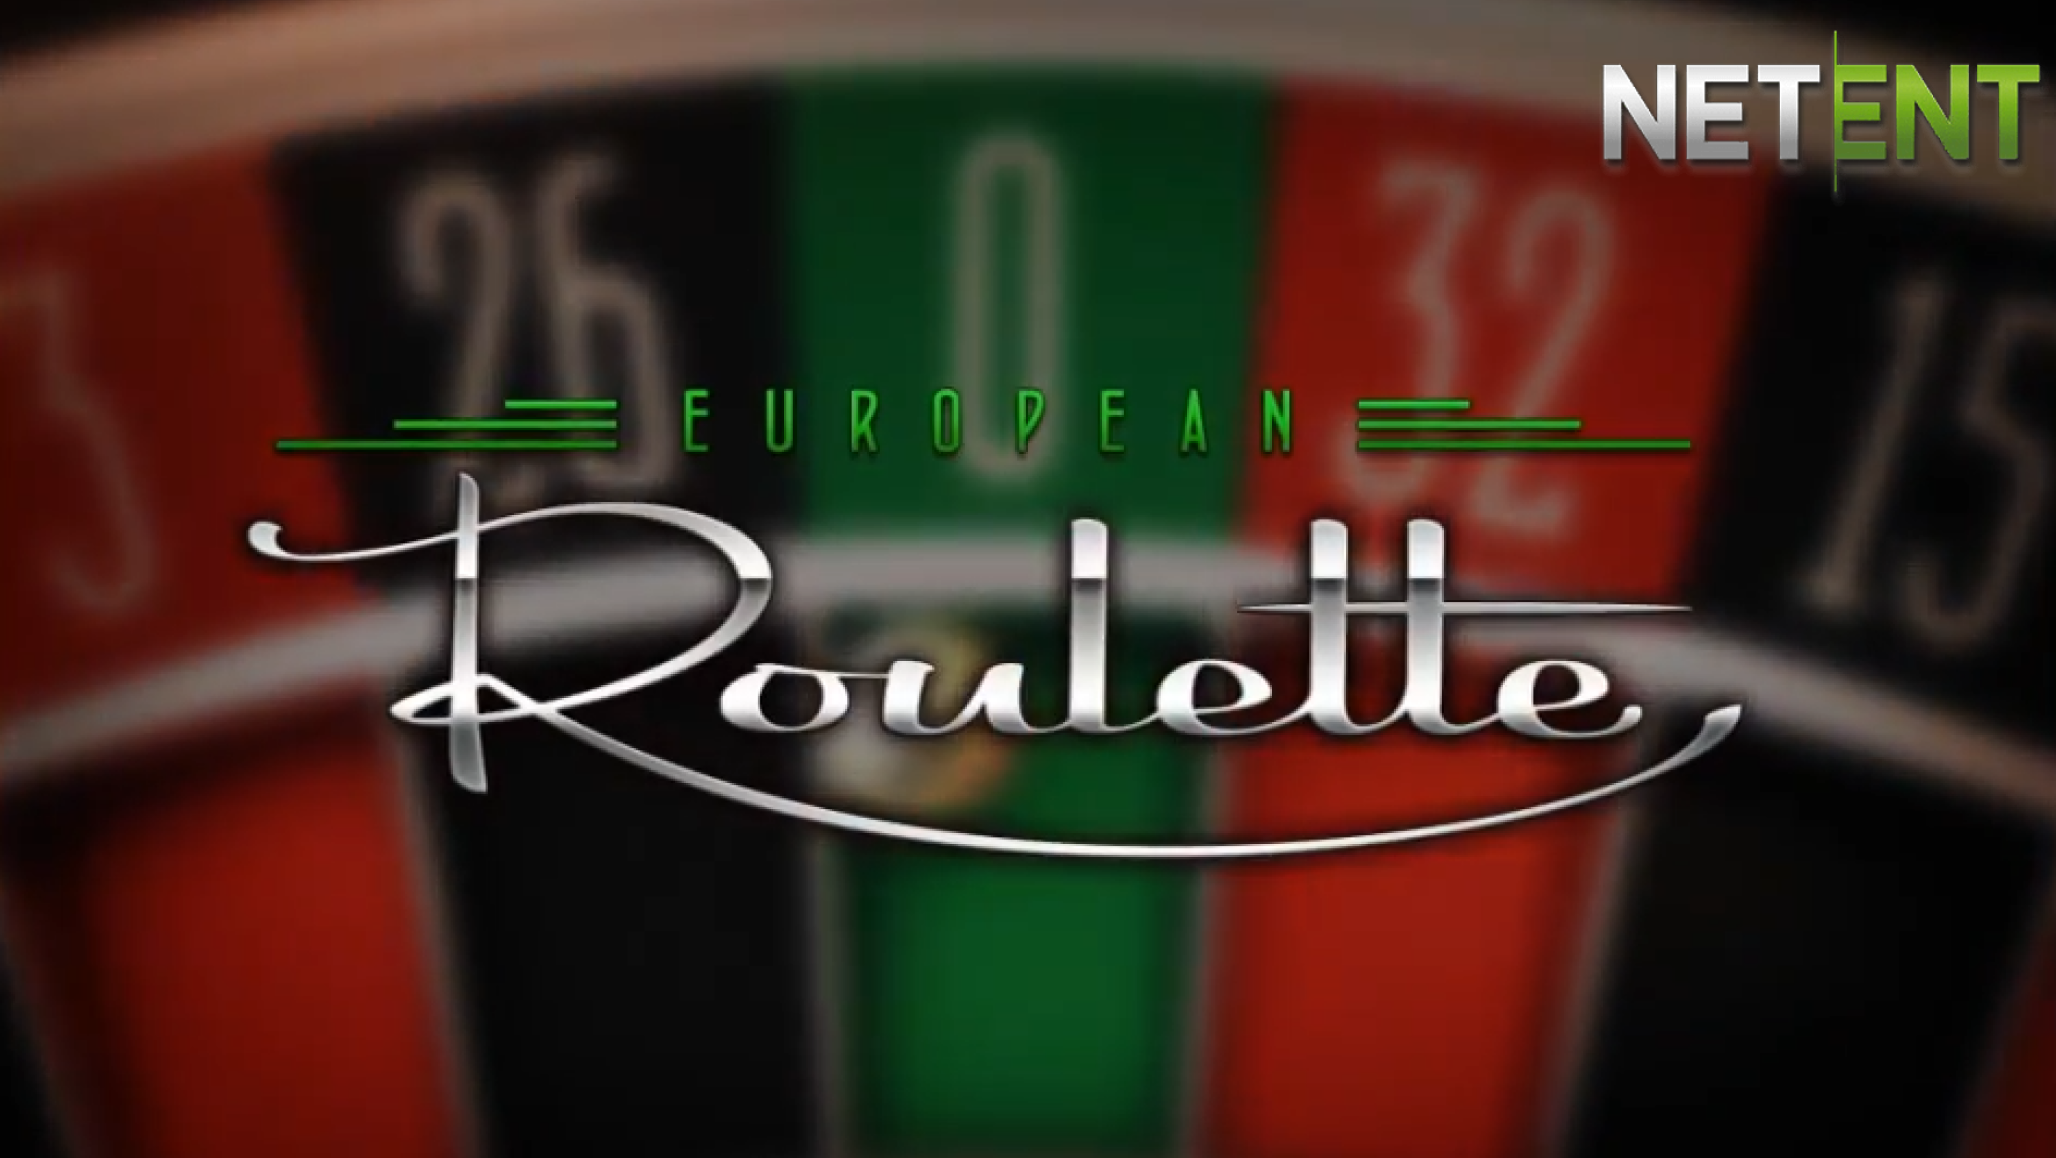 NetEnt sa European Roulette